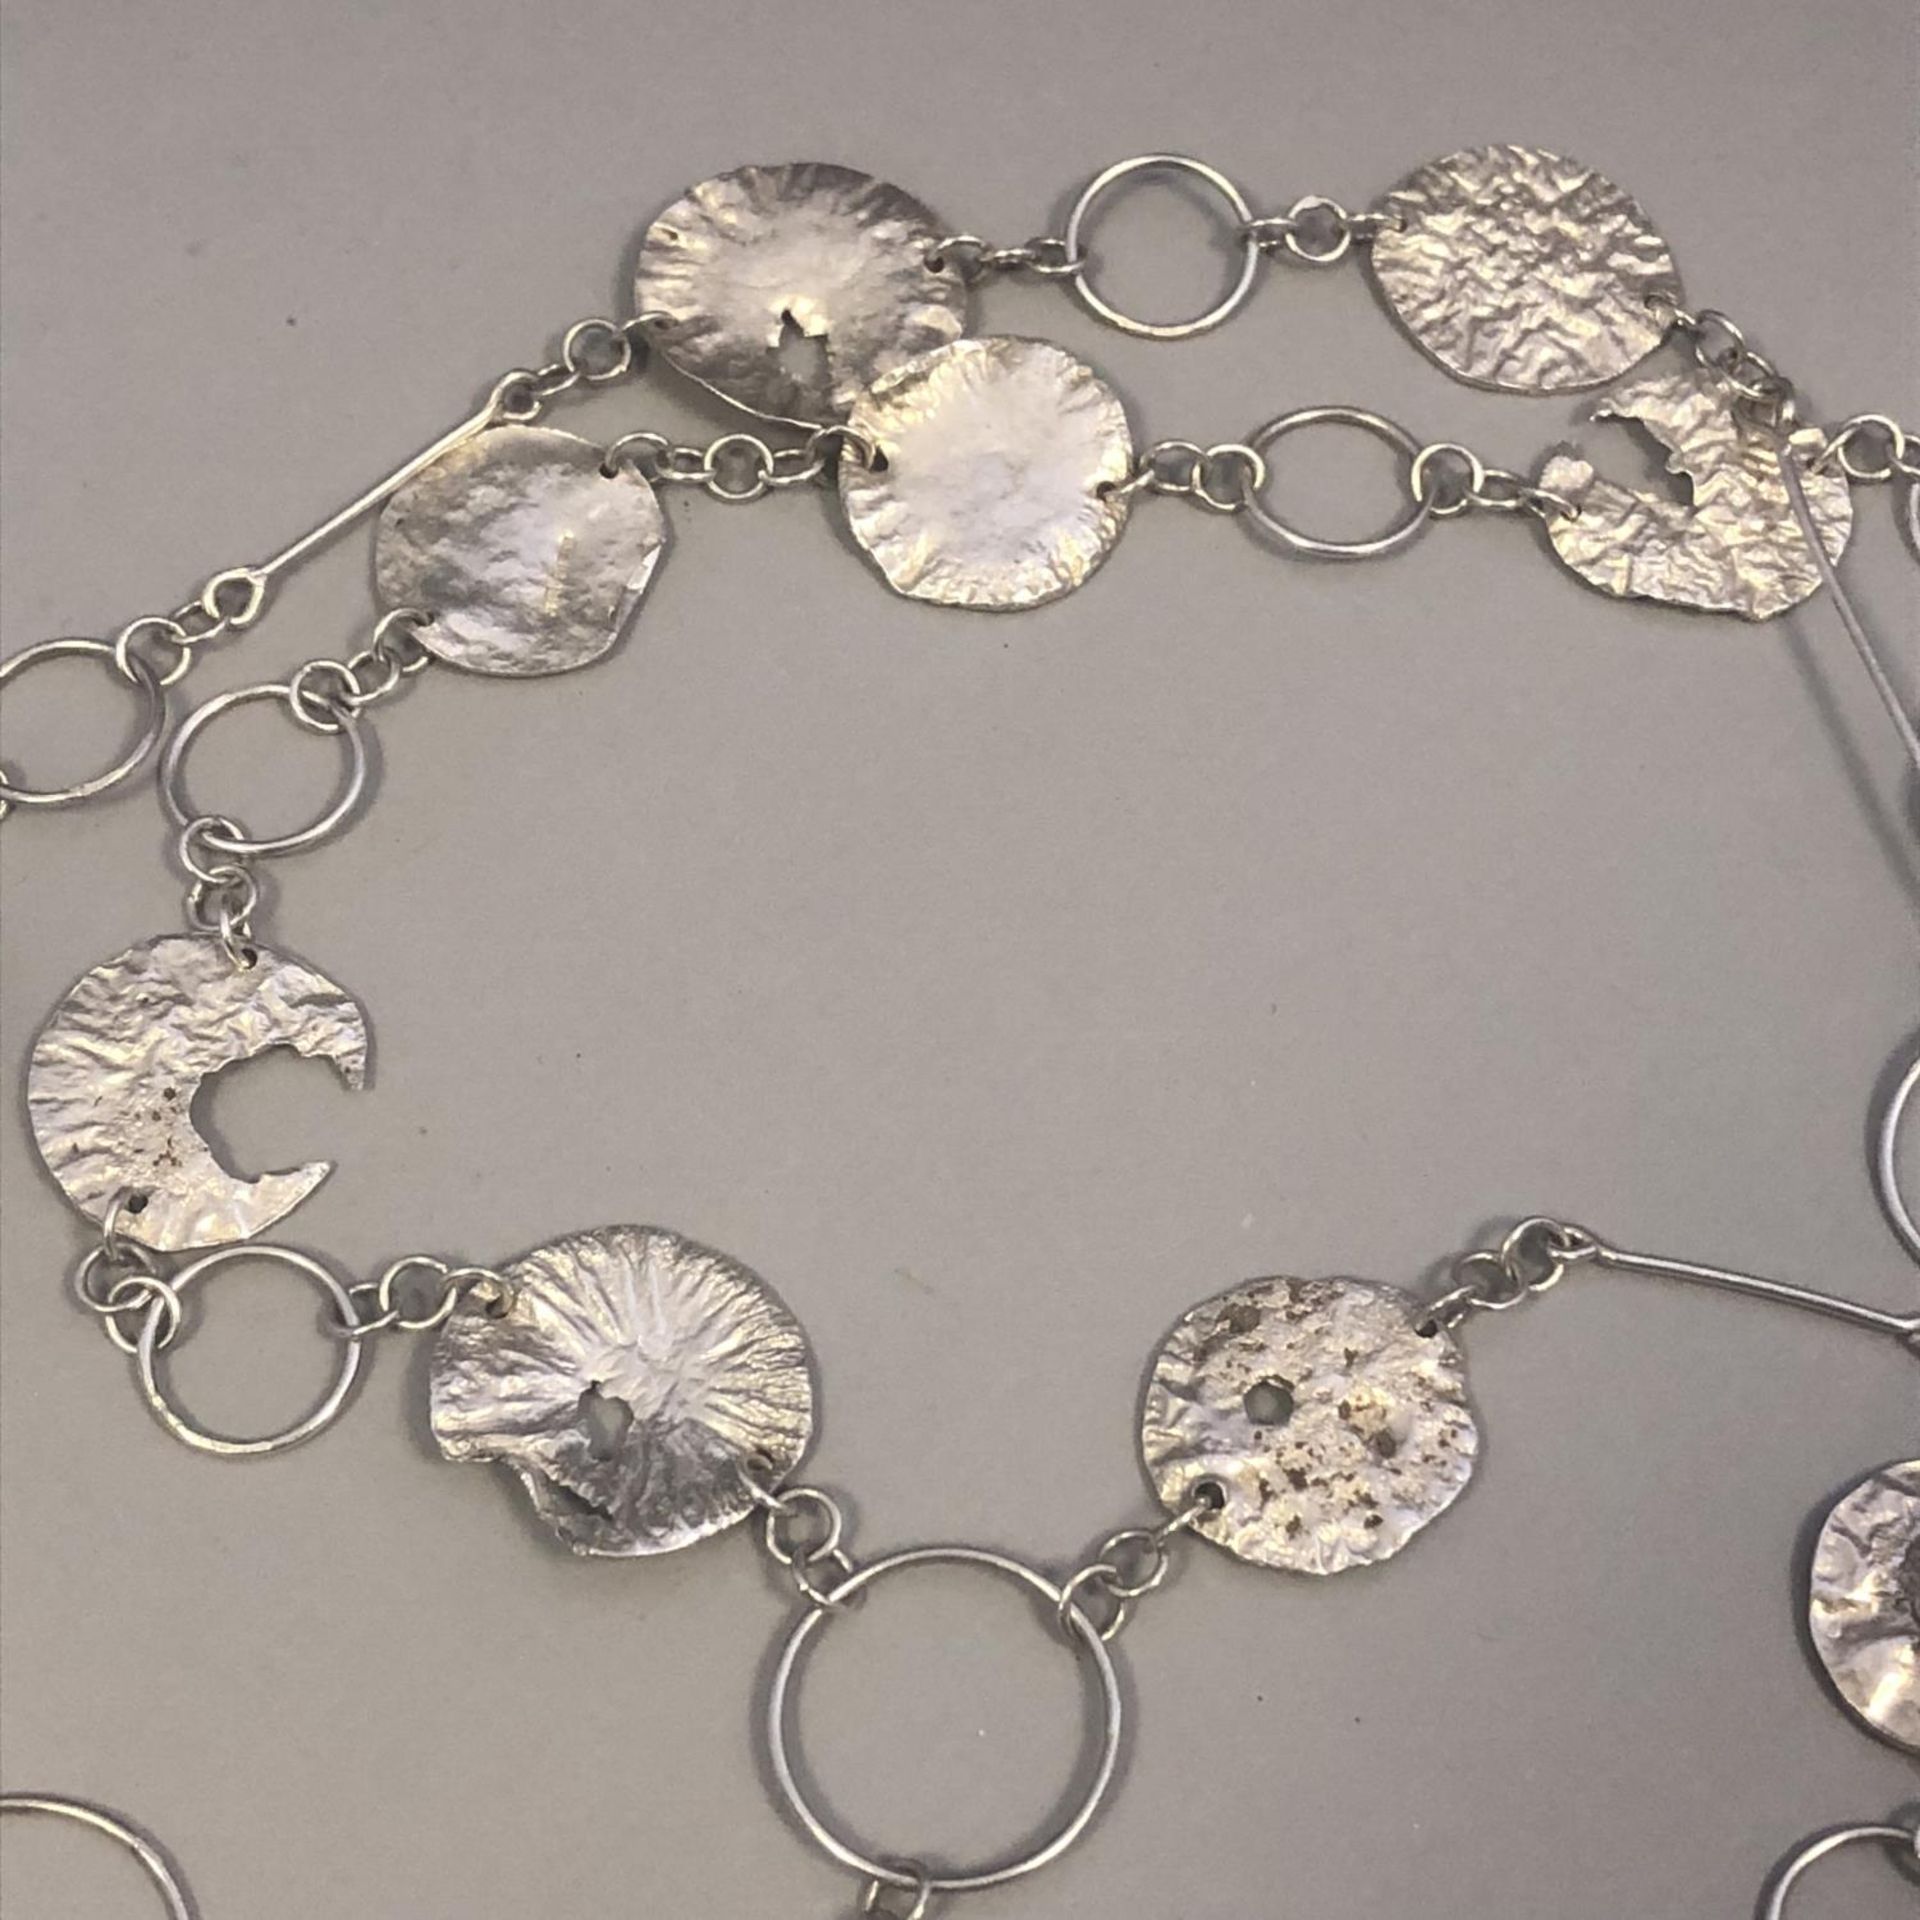 1970s Hallmarked Silver Brutalist Modernist Hammered Coin Necklace - Sheffield Hallmarks - Image 5 of 6